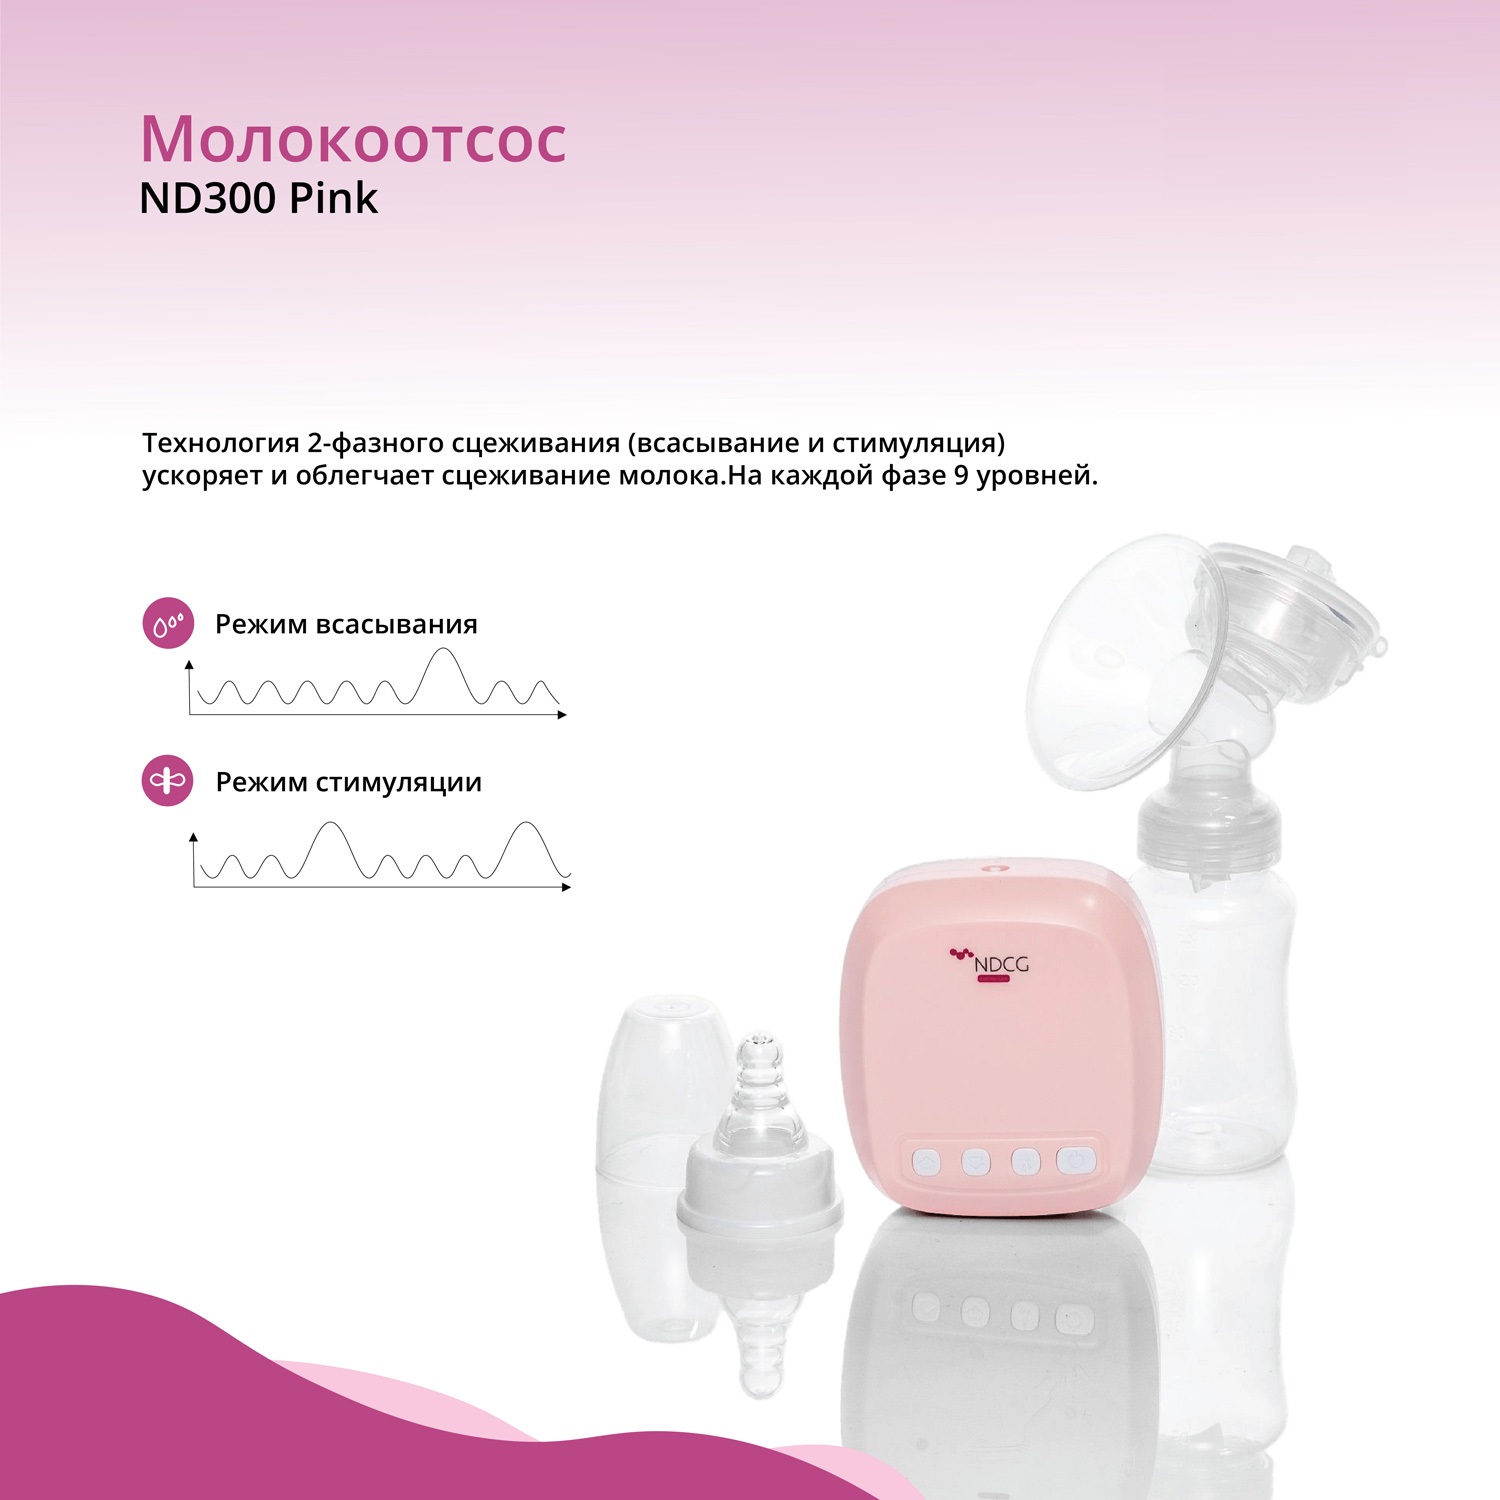 Молокоотсос NDCG электрический двухфазный Standard ND300 Pink - фото 5